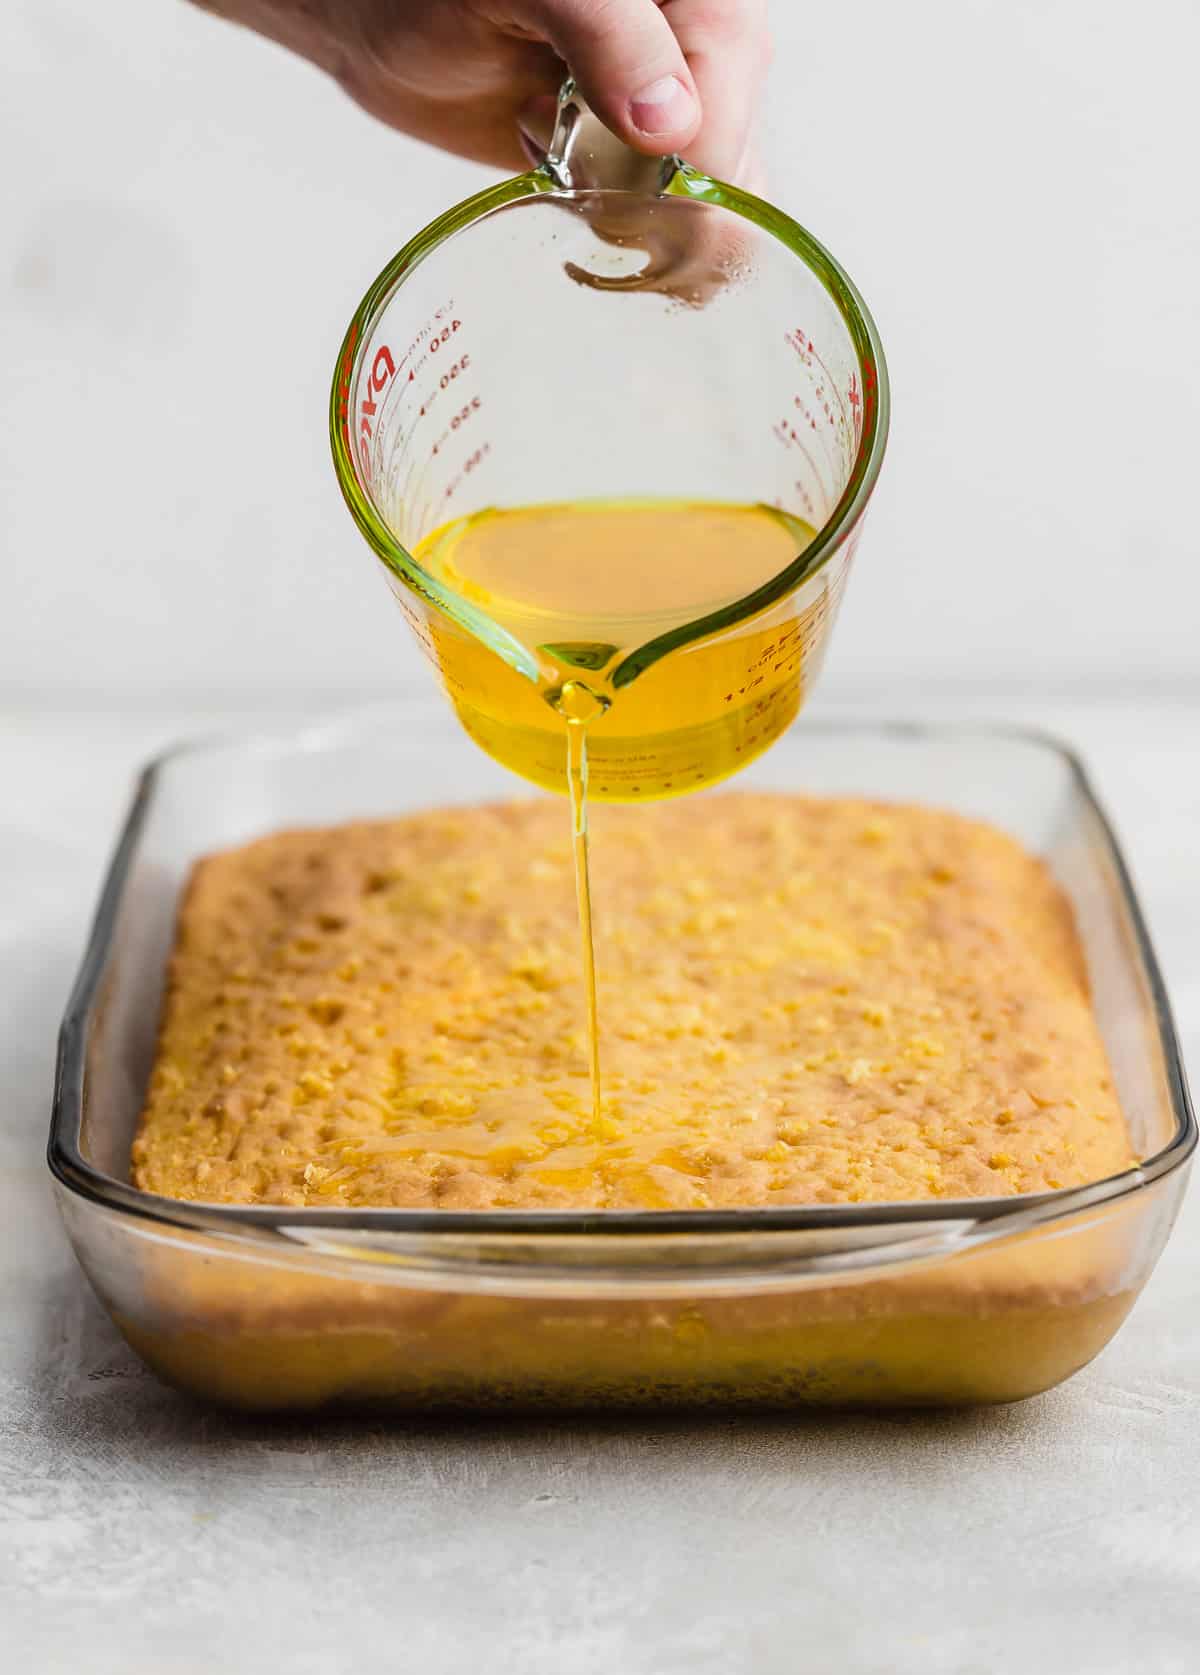 Lemon jello liquid mixture being poured overtop a baked lemon cake.